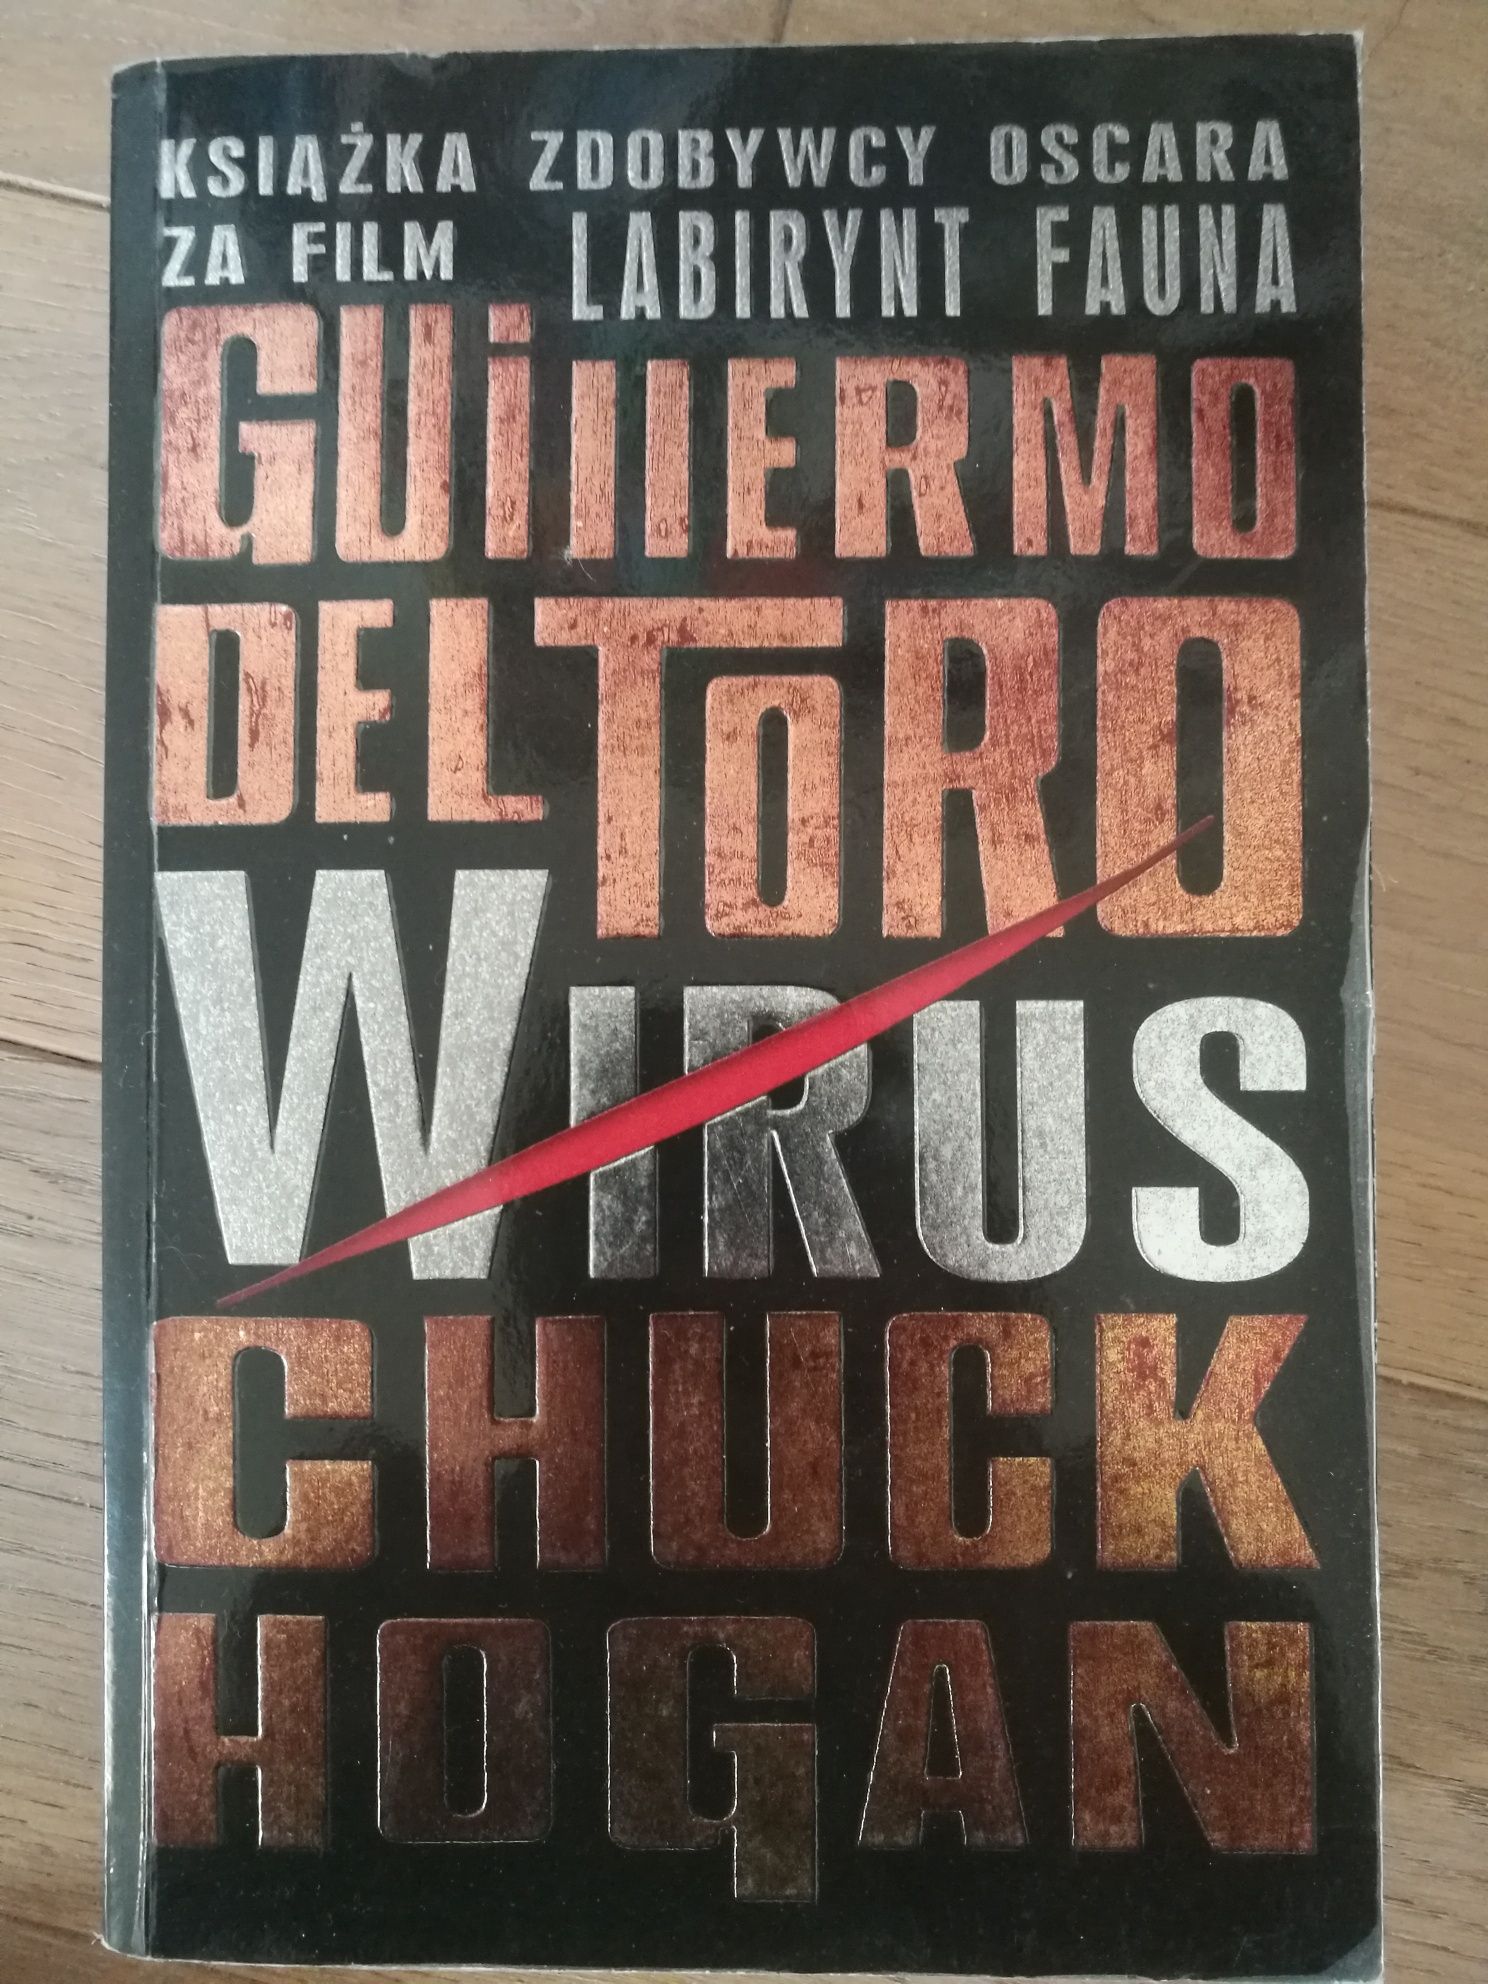 Ksiazka "Wirus" Chuck Hogan, Guillermo del Toro